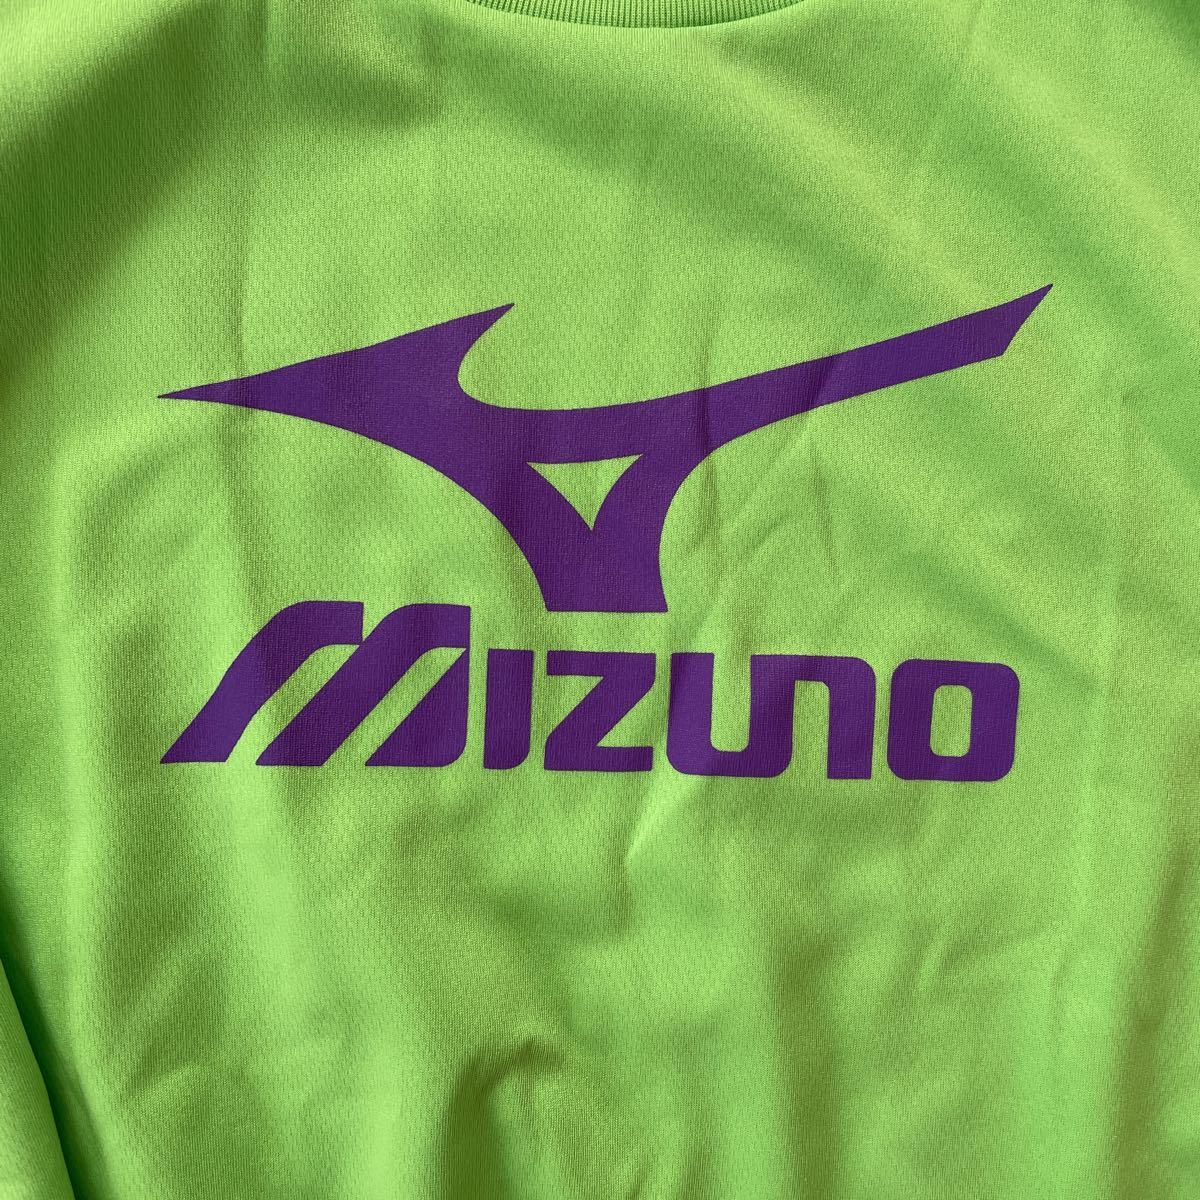 MIZUNO Mizuno p Ractis shirt short sleeves T-shirt polyester S size 